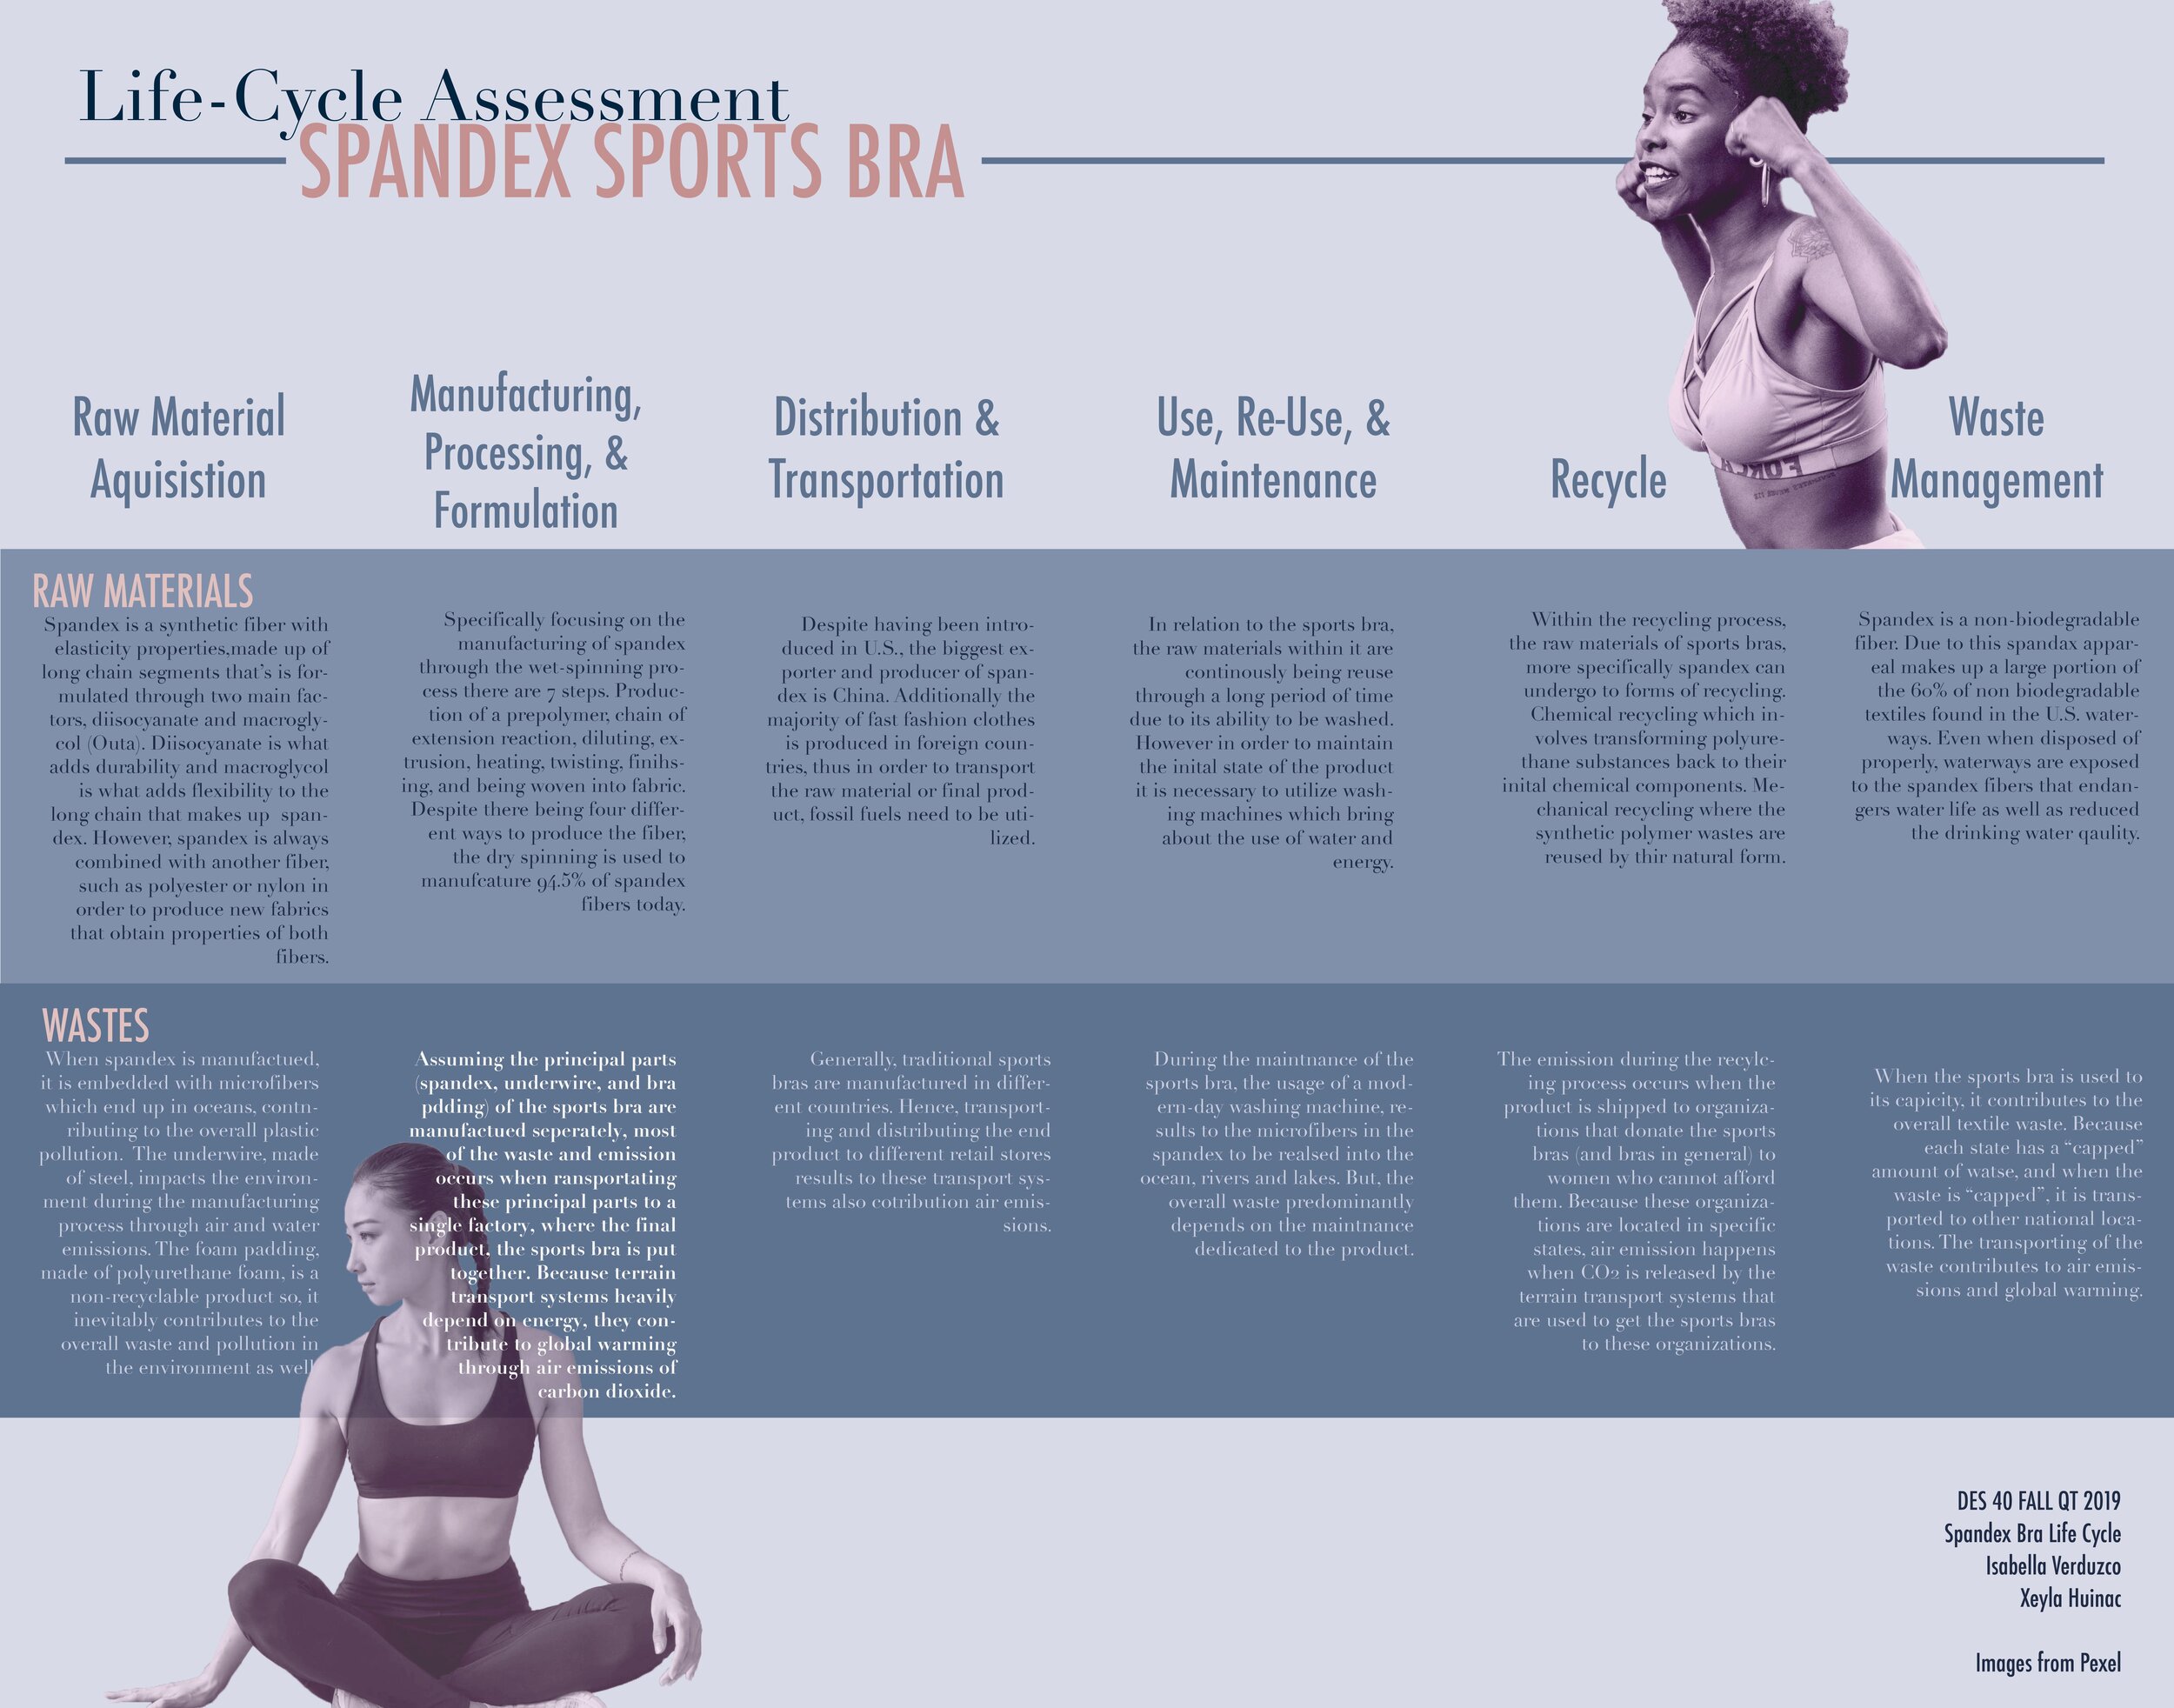 Spandex Sports Bra — Design Life-Cycle